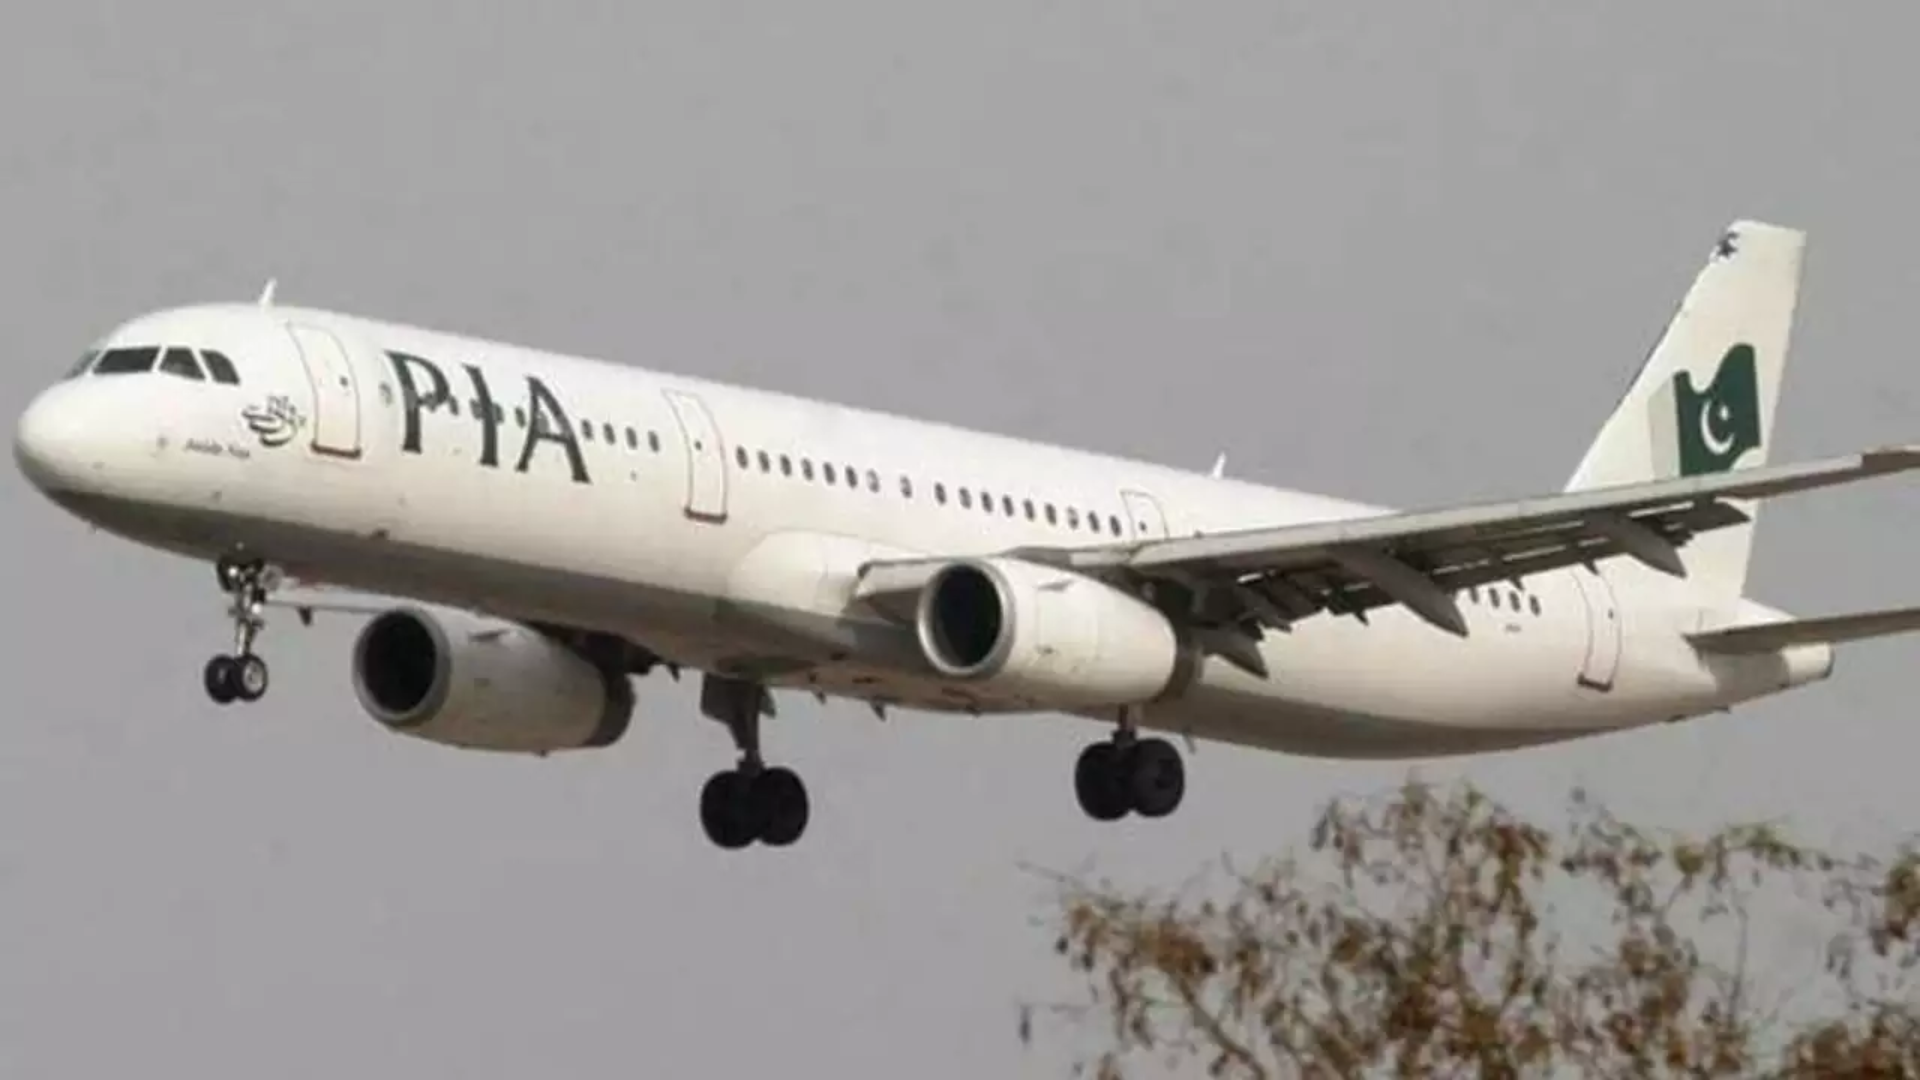 Pakistani Airlines, Hajj Flight Makes Emergency Landing In Saudi Arabia Following Sound Of Explosion